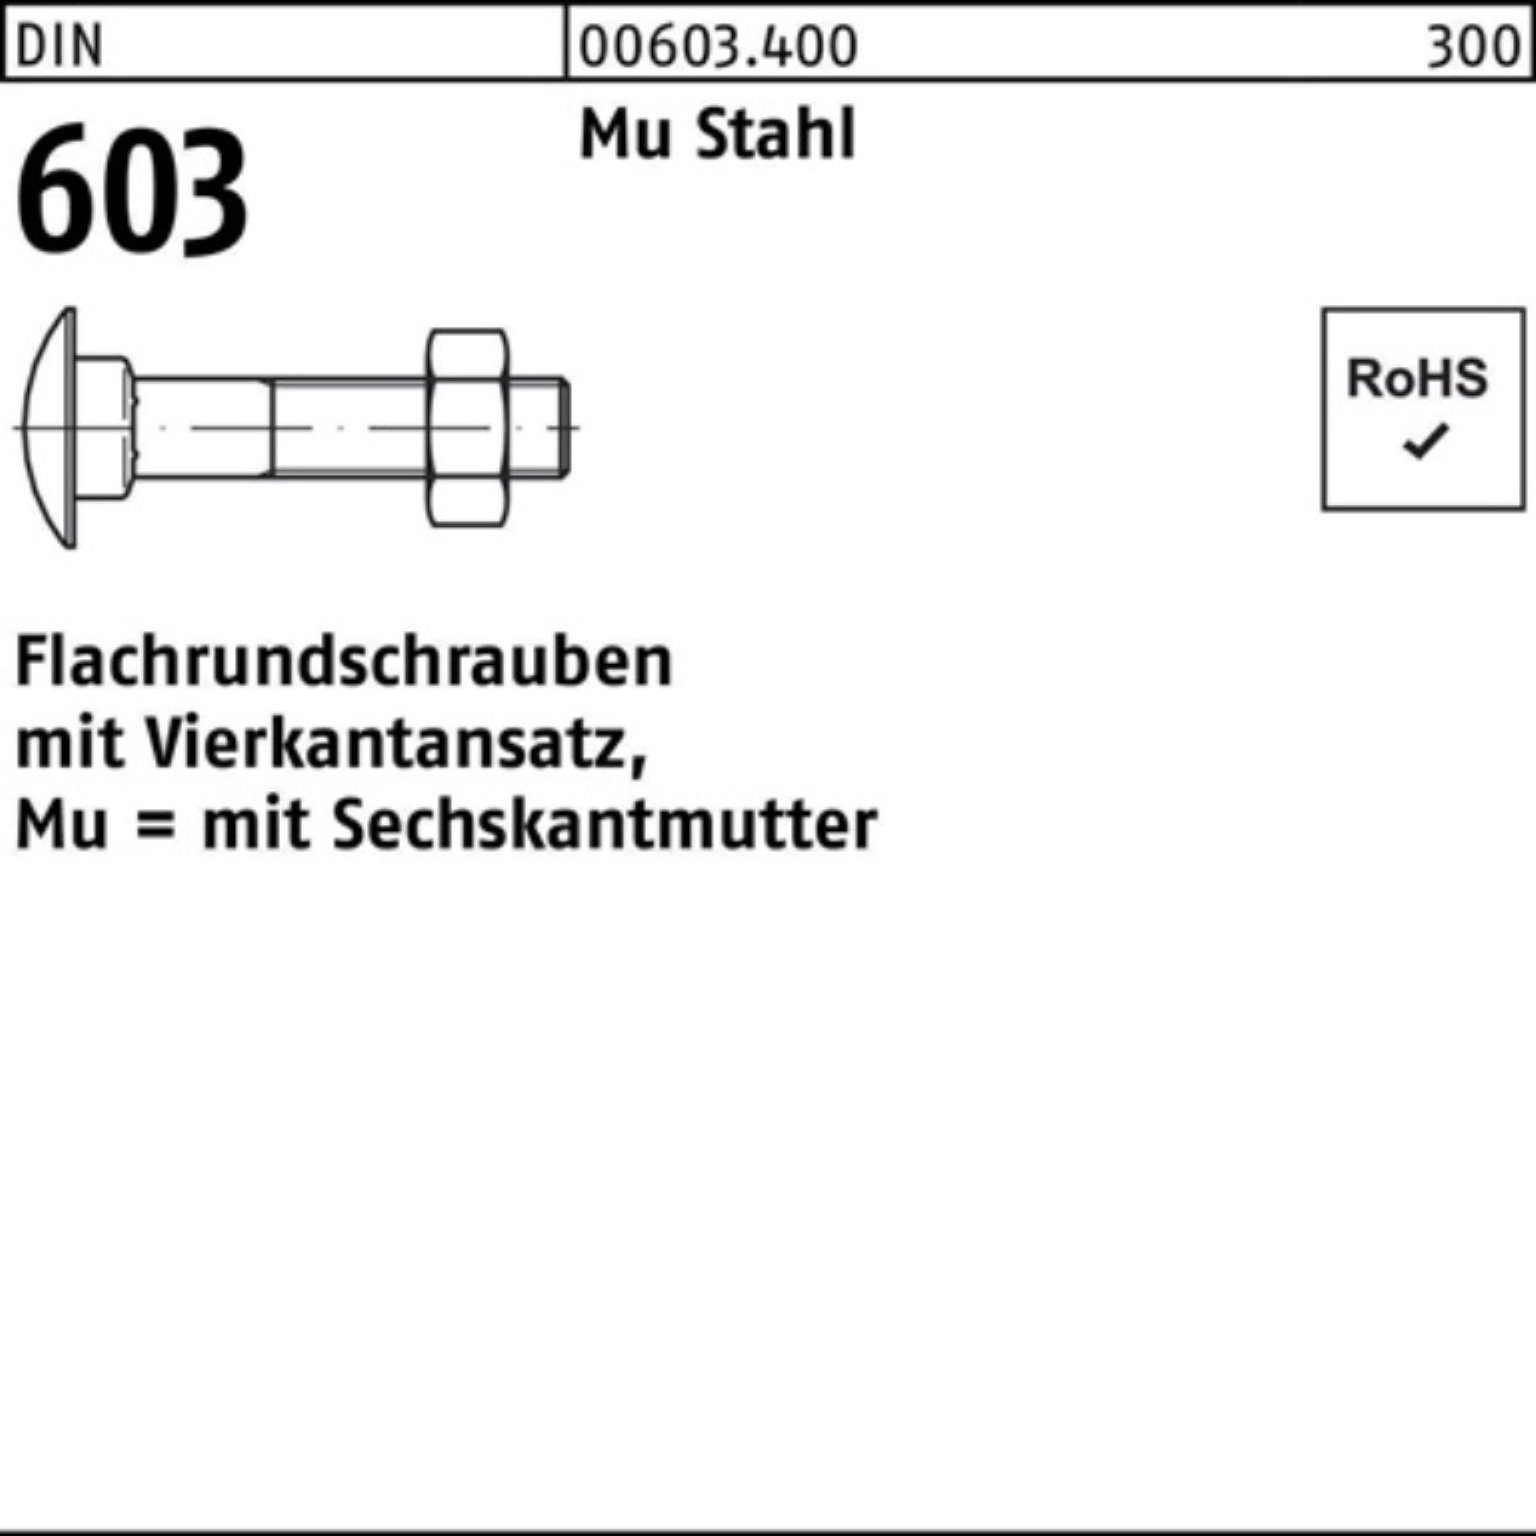 Pack Vierkantansatz/6-ktmutter 603 Schraube DIN Flachrundschraube Reyher M12x45 100er